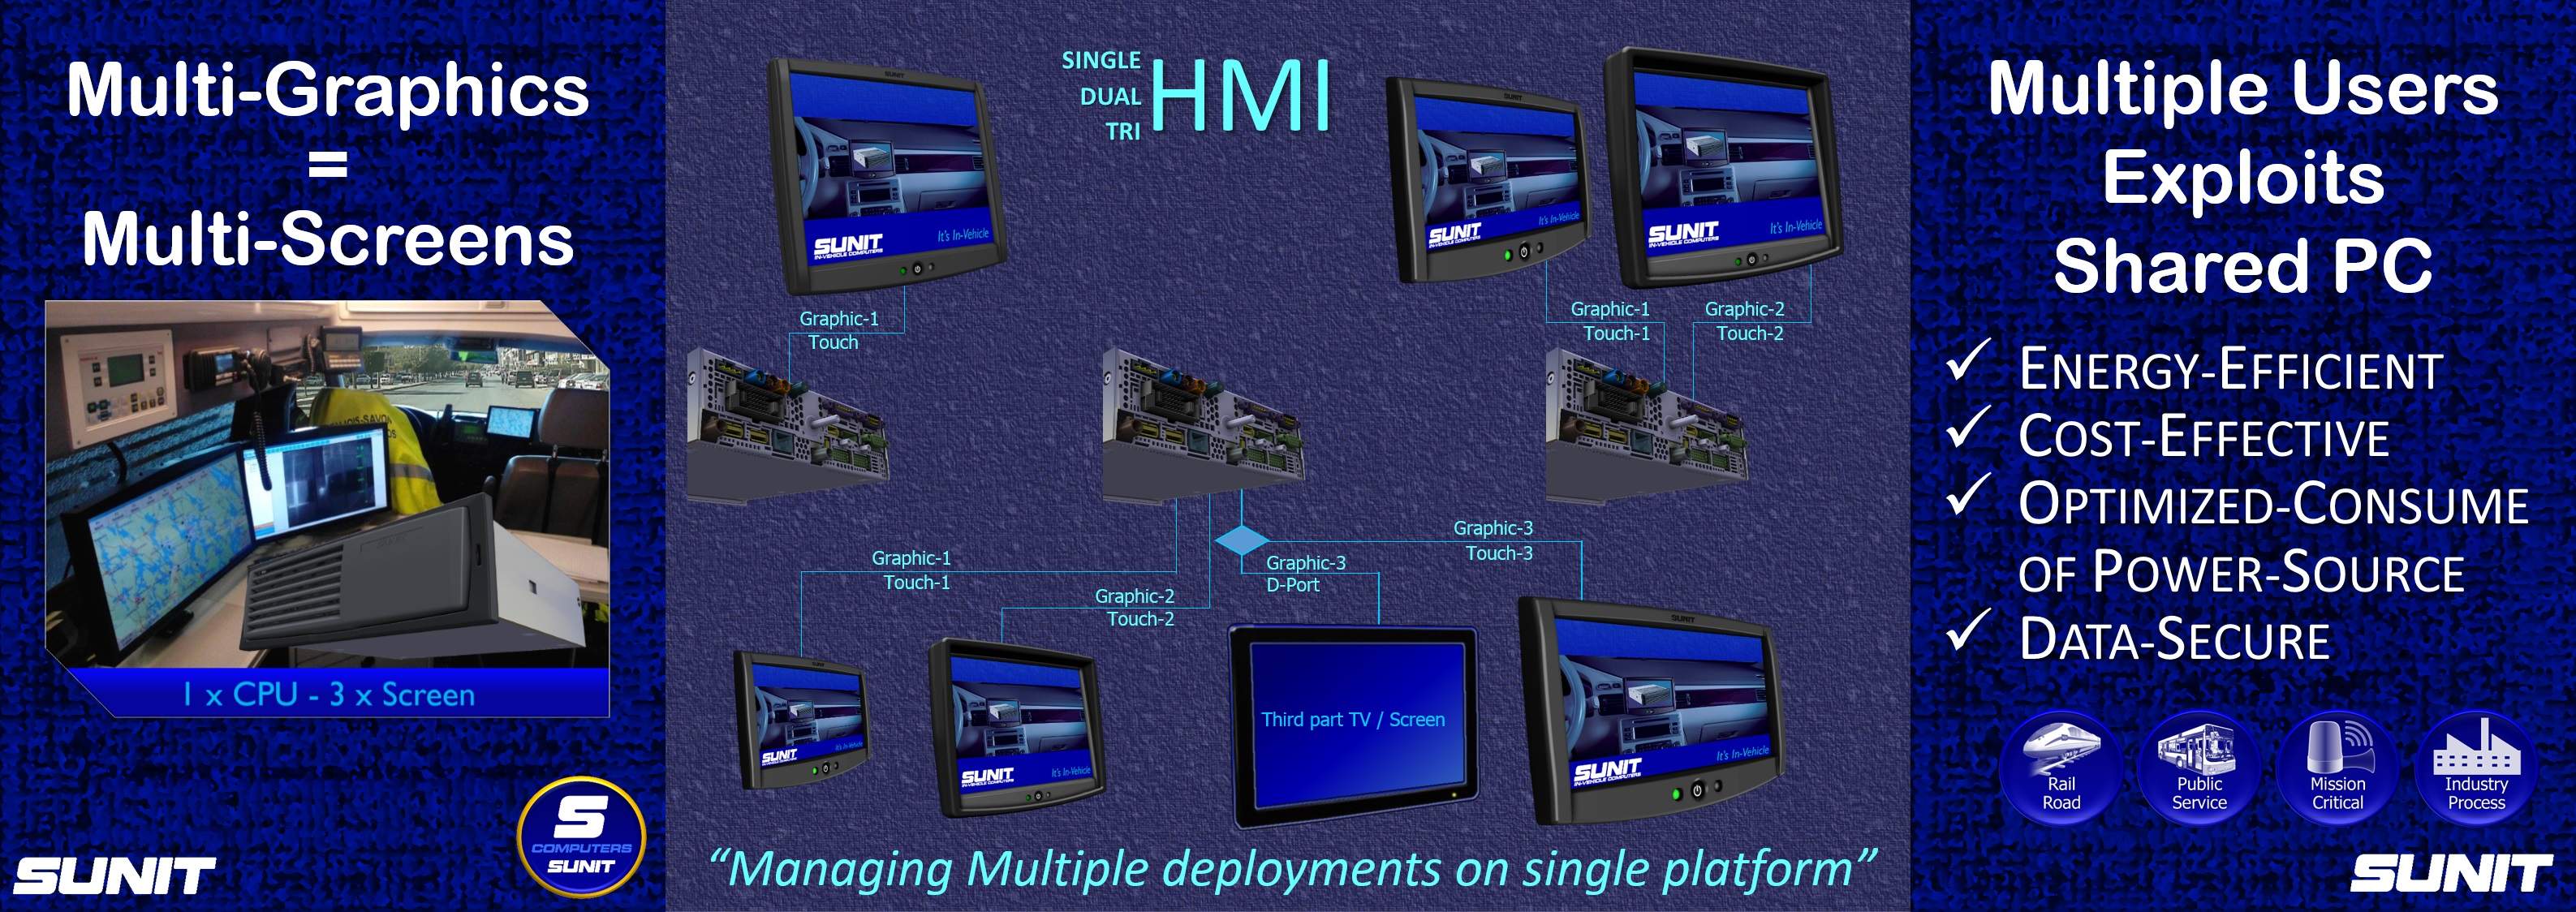 SUNIT Multi-Screen technologies